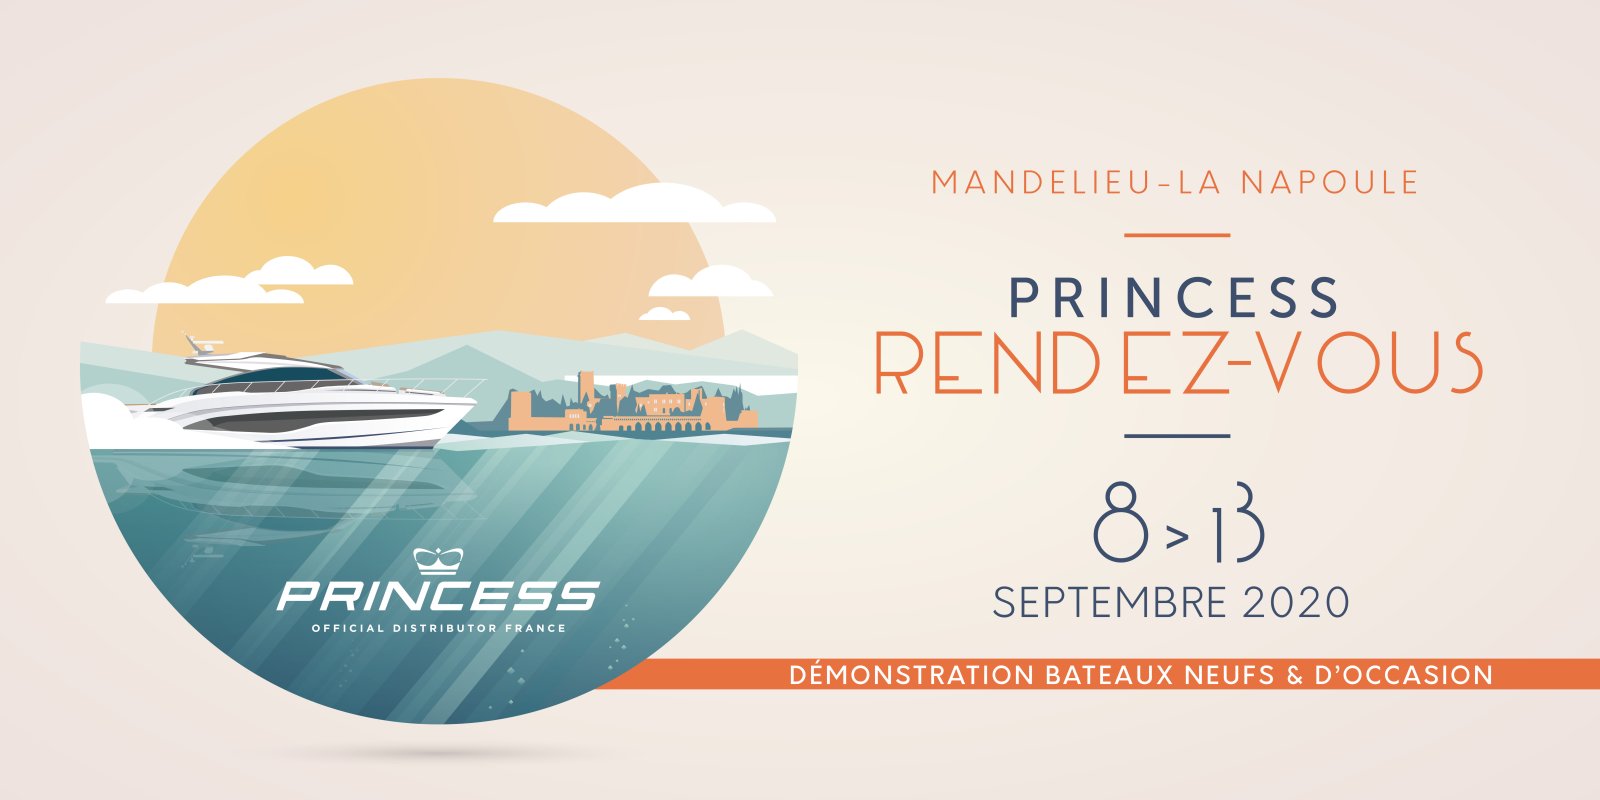 PRINCESS Yachts Rendez-vous 8-13 SEPTEMBER